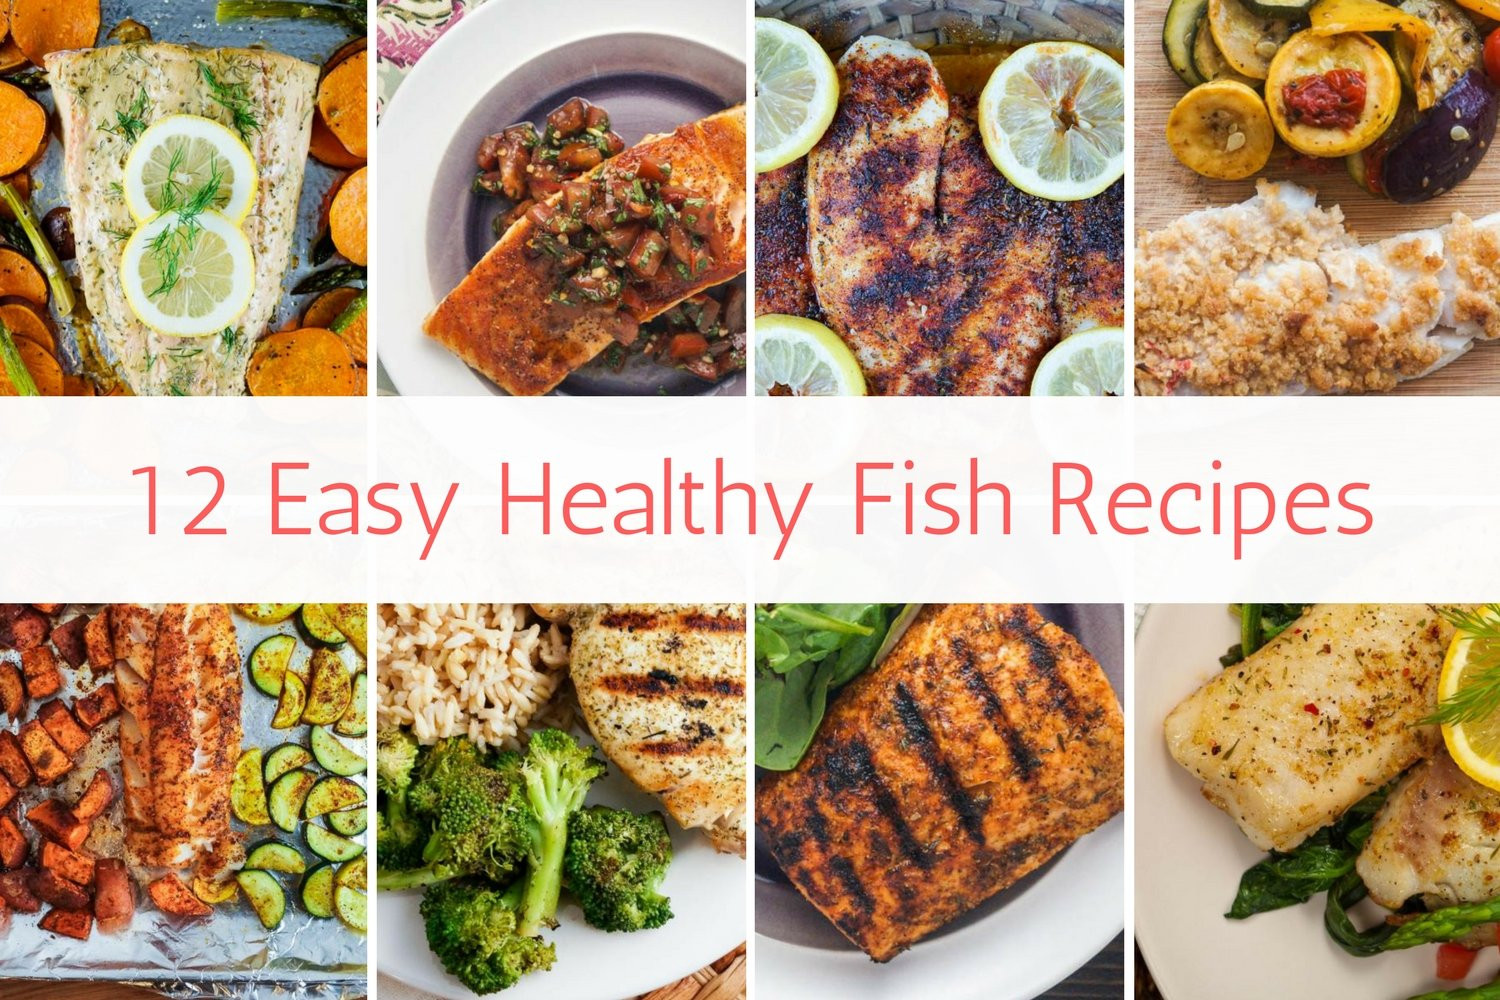 Tasty Fish Recipes Elegant 12 Easy Healthy Fish Recipes Slender Kitchen